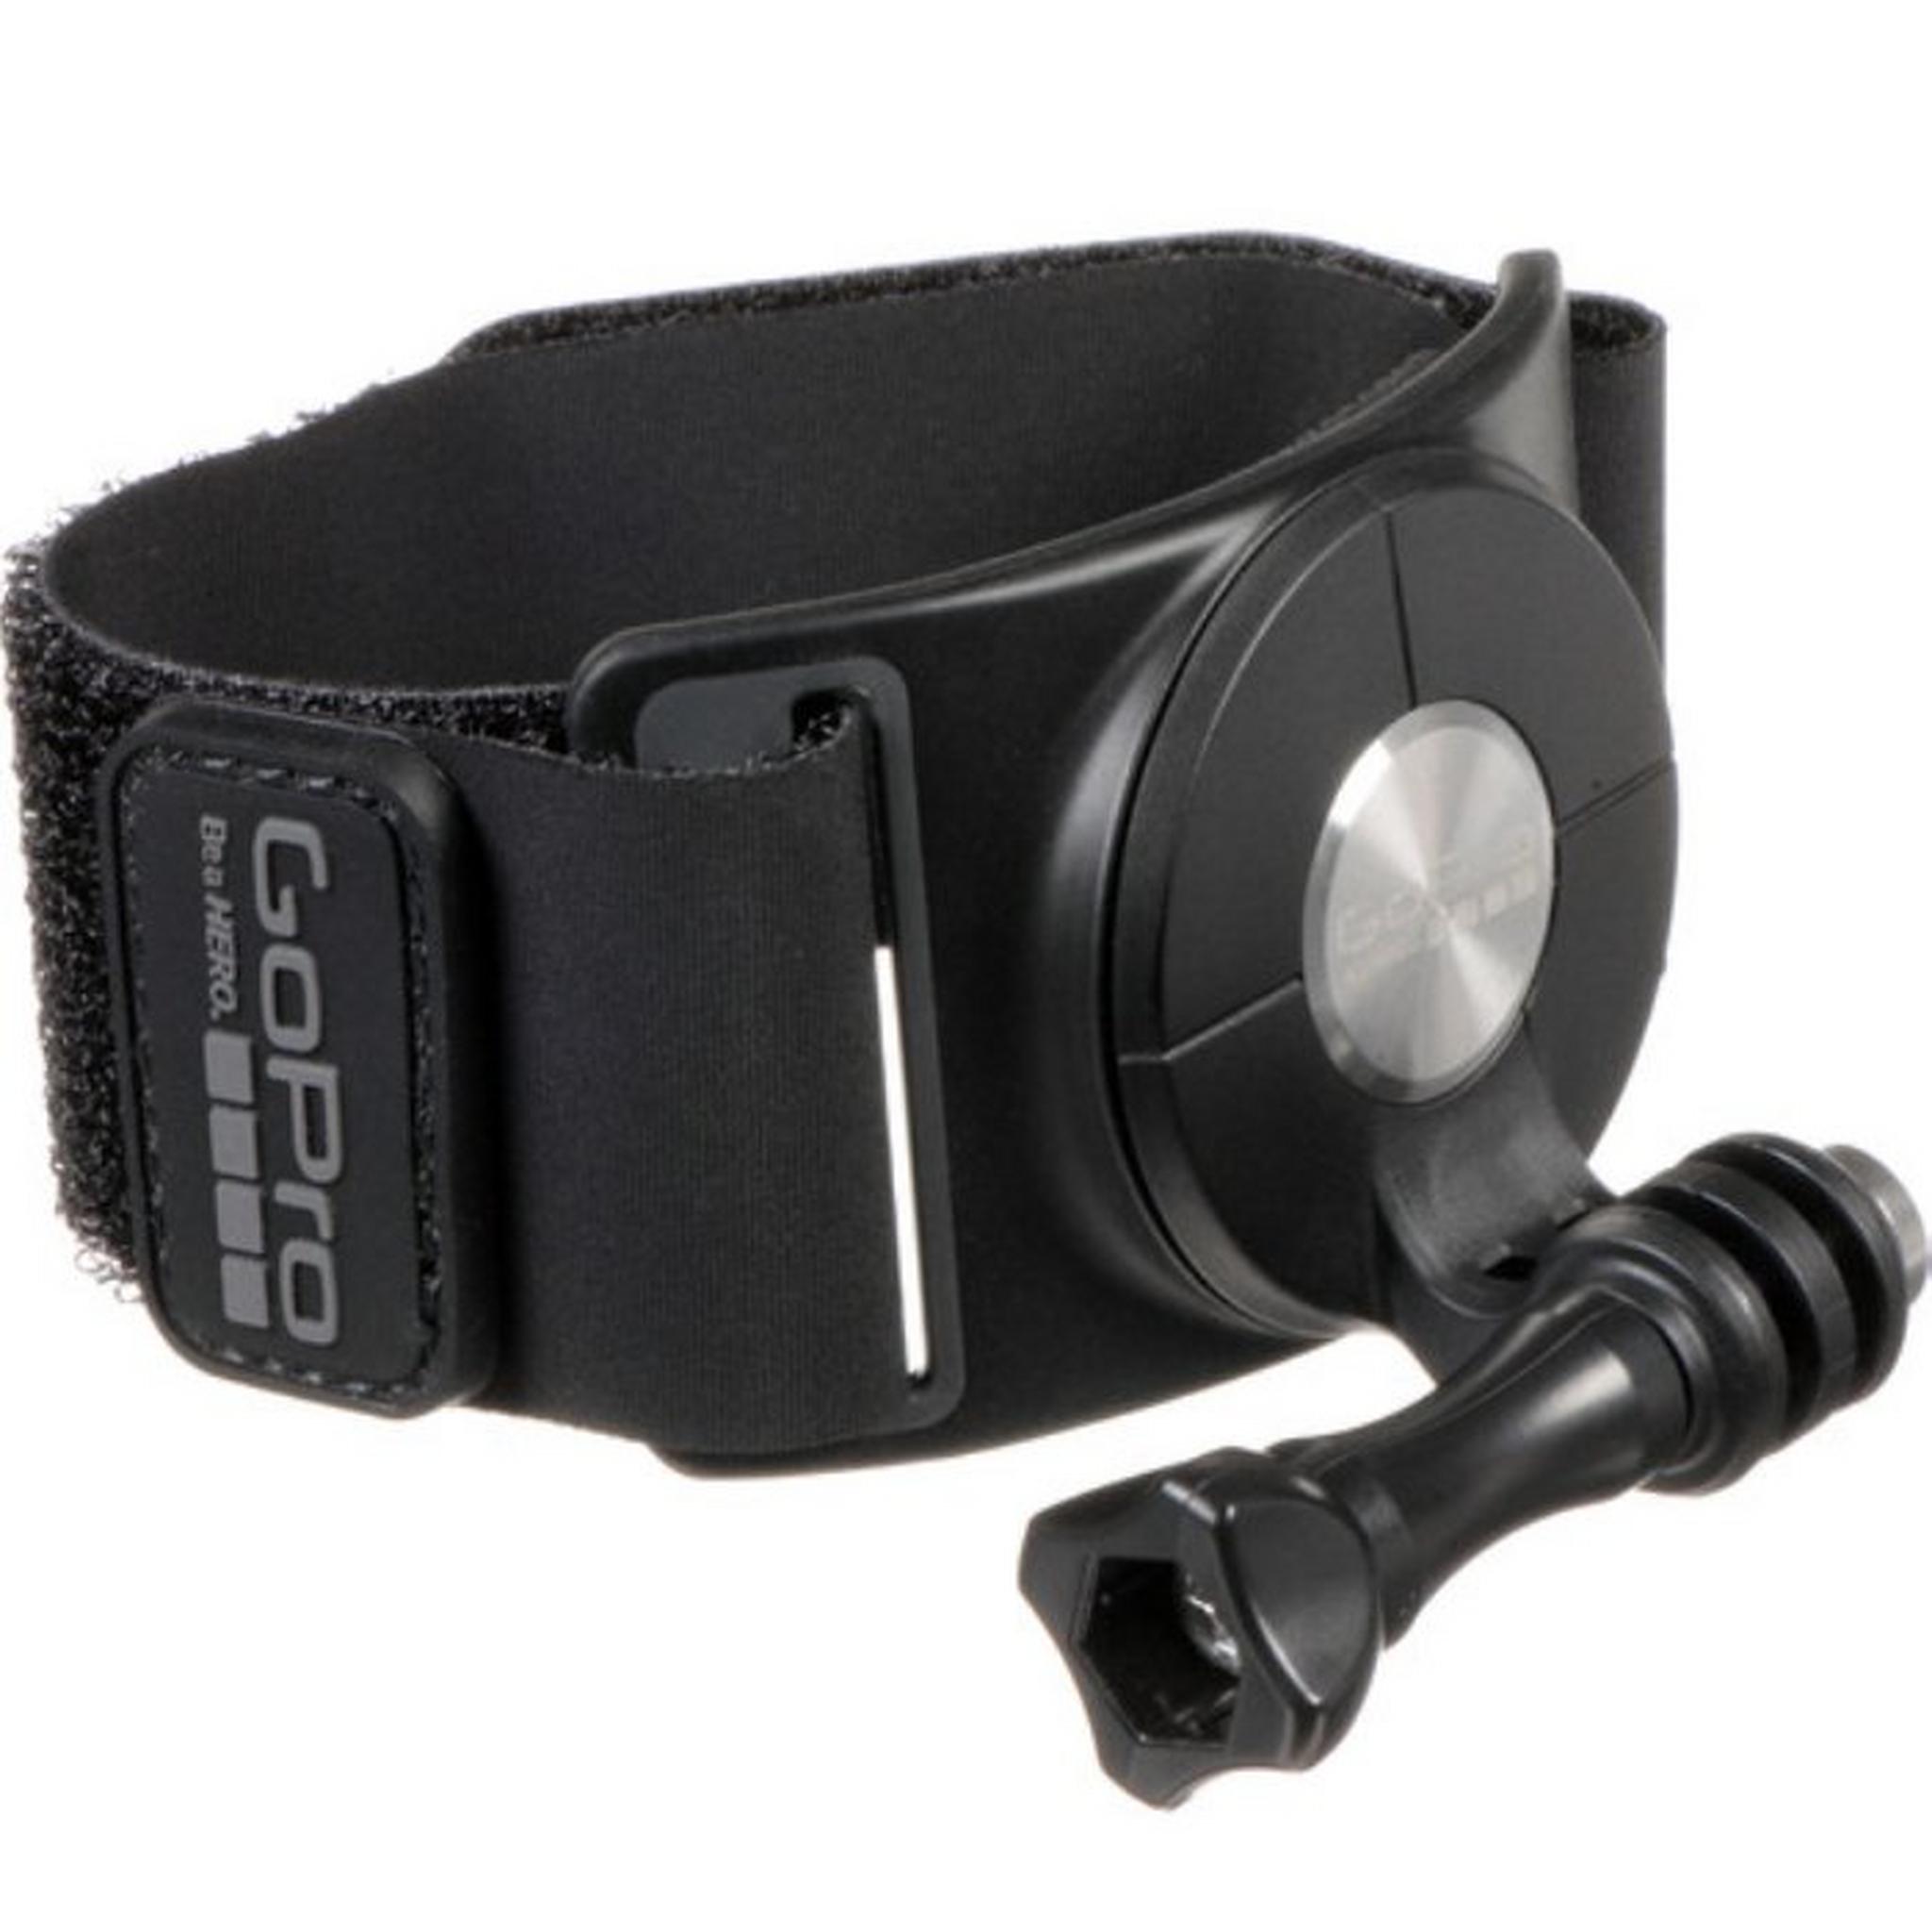 GoPro Hand and Wrist Strap, G02AHWBM-002 – Black